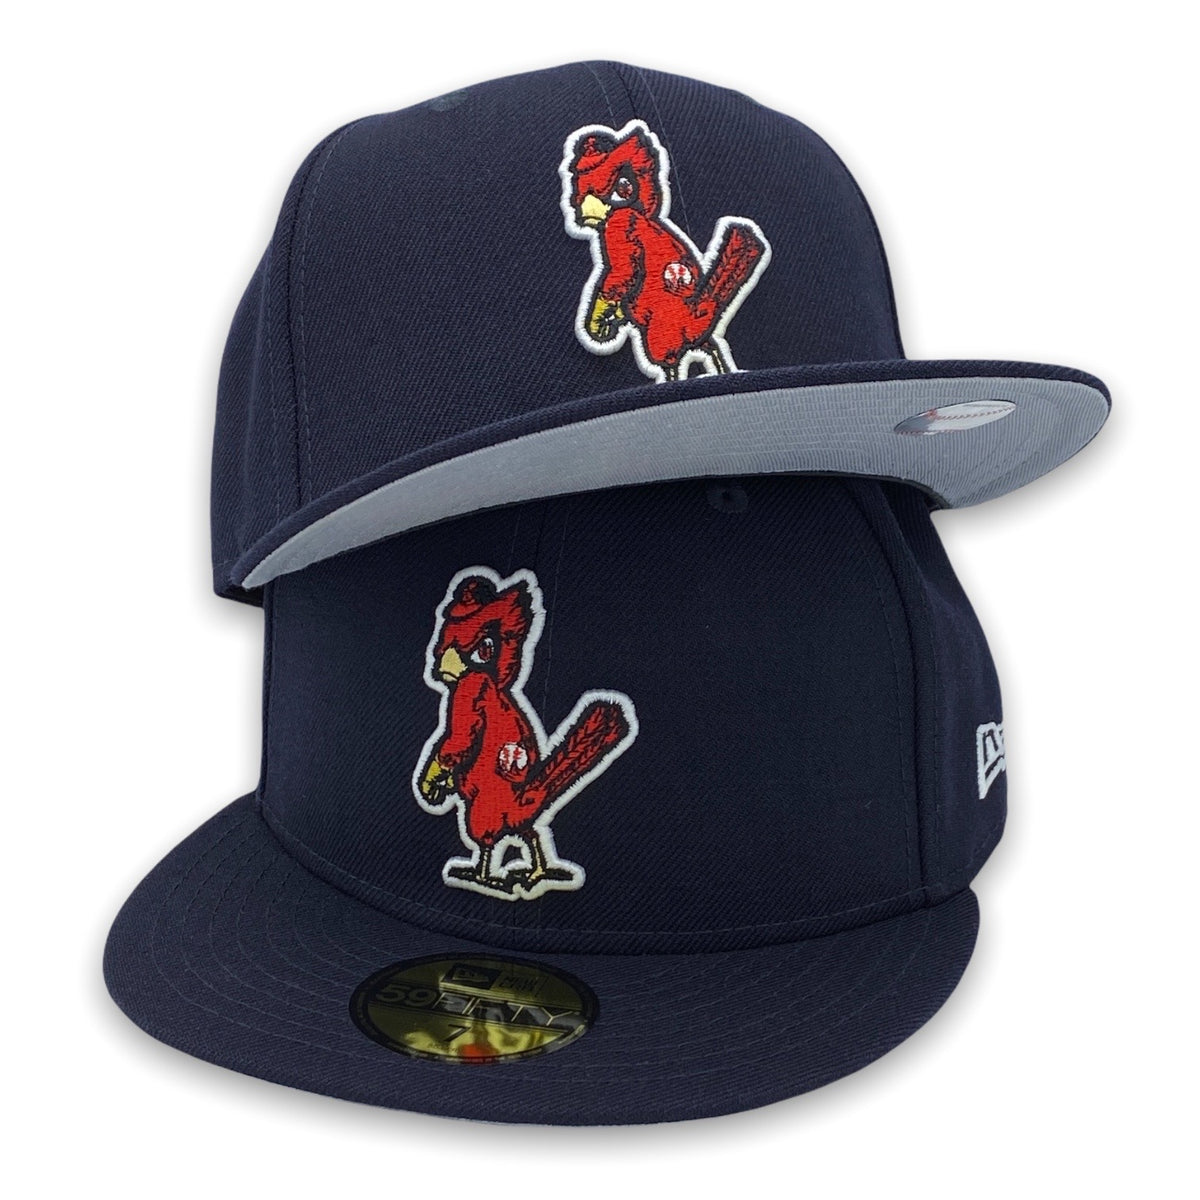 1950 St. Louis Cardinals Hat by Vintage Brand